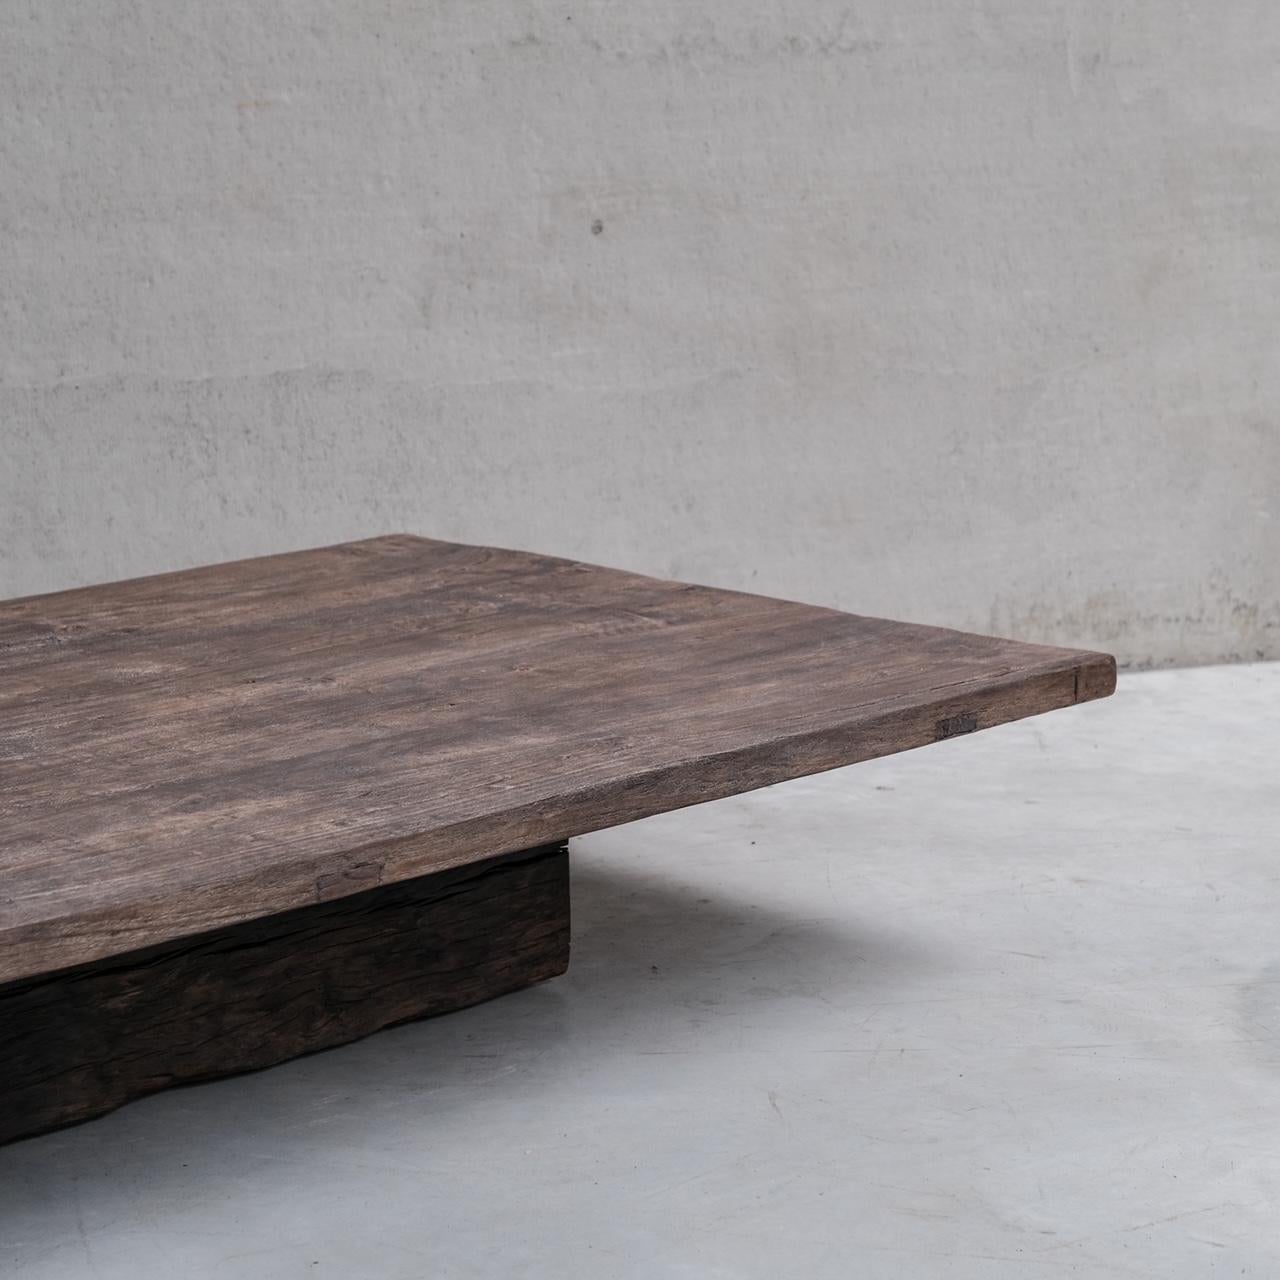 Belgian Primitive Wabi-Sabi Esque Wooden Coffee Table For Sale